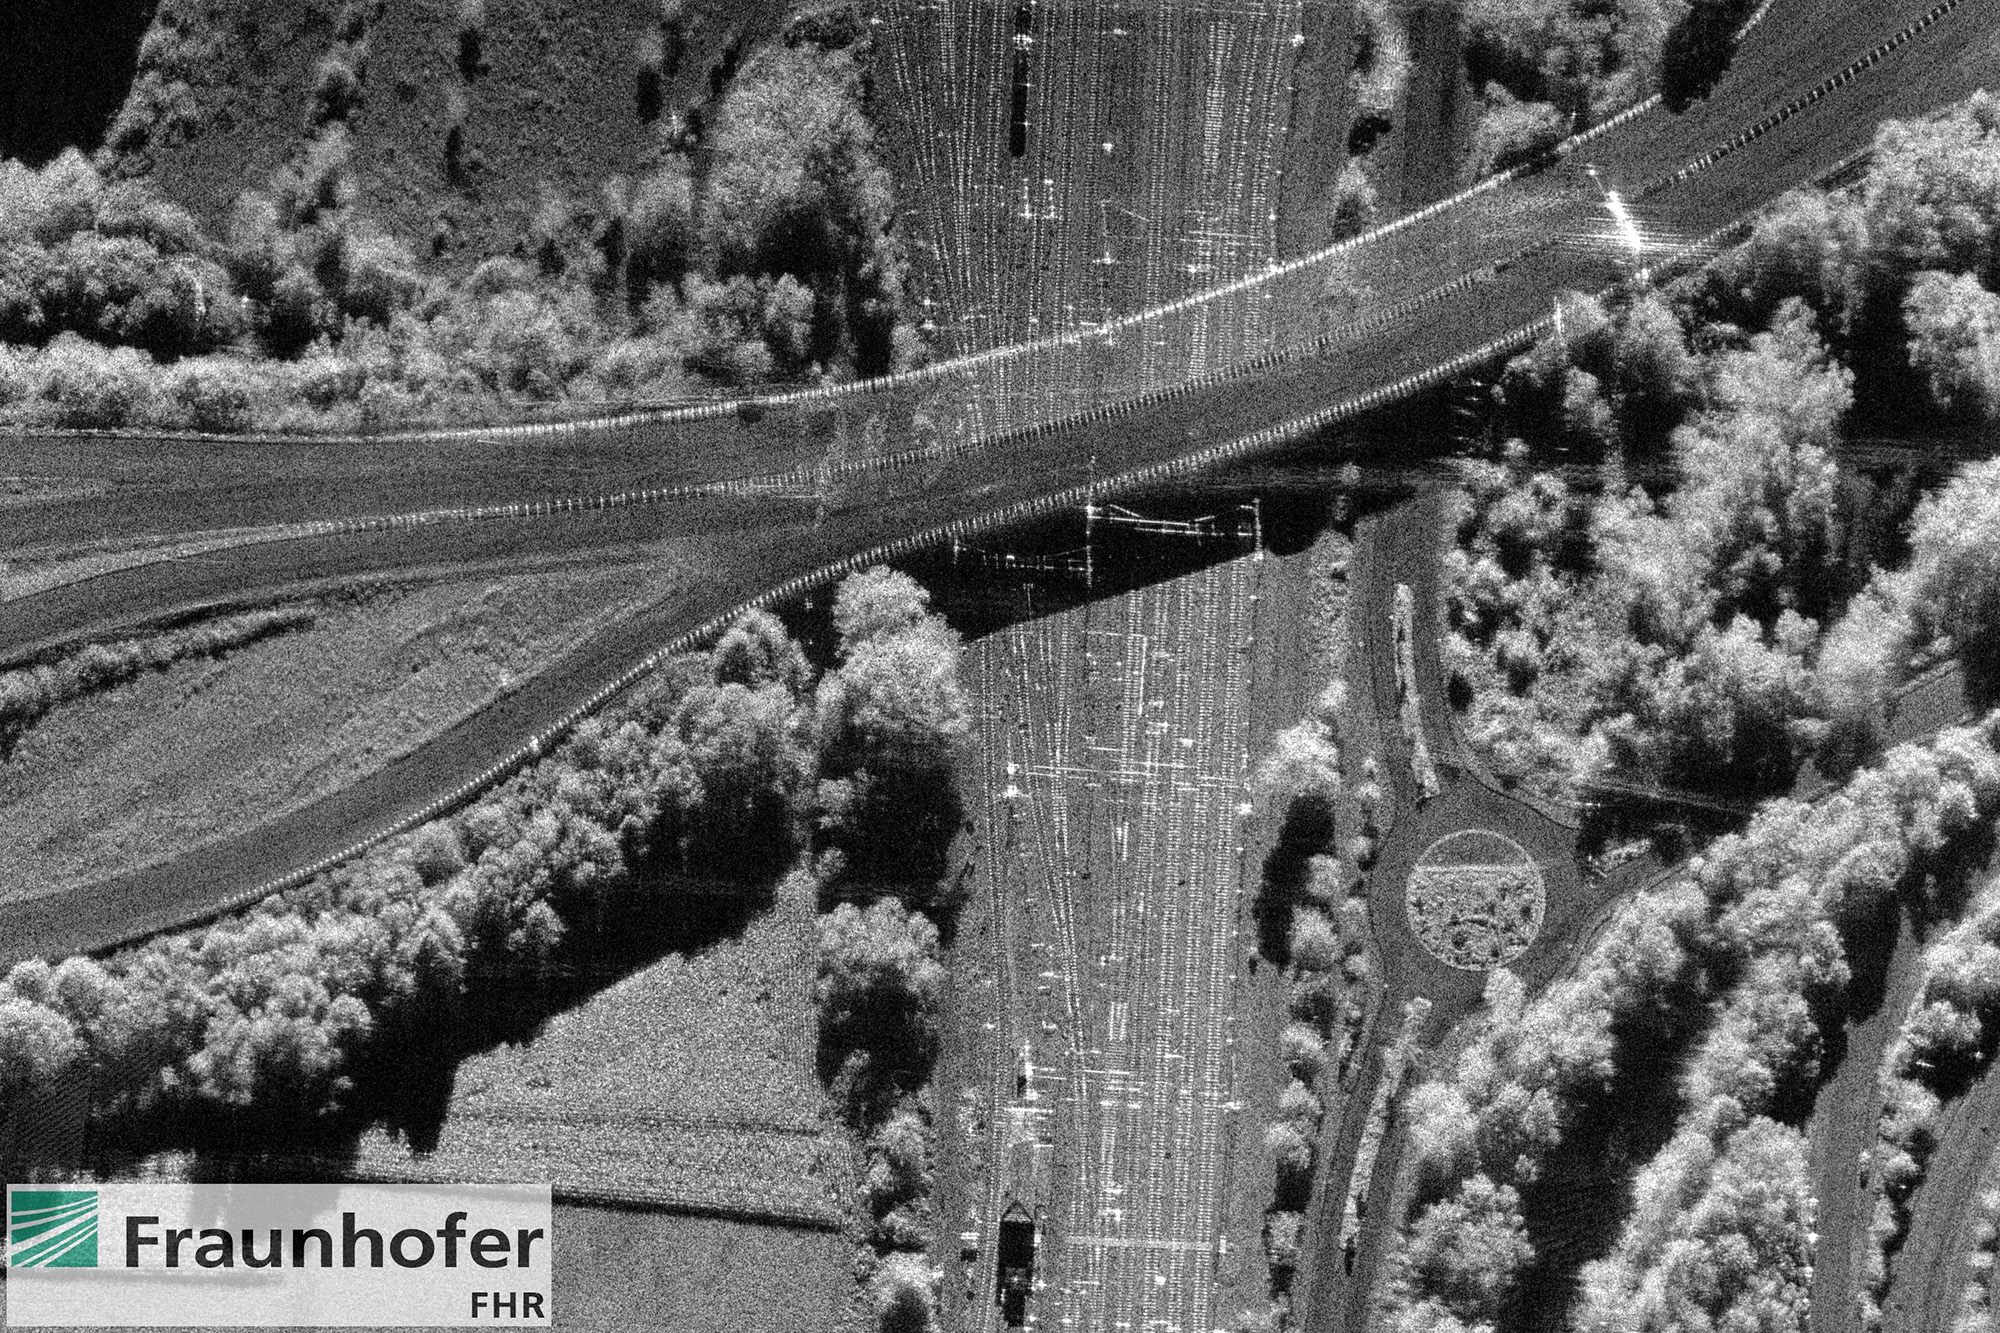  High-resolution radar image of a railway line